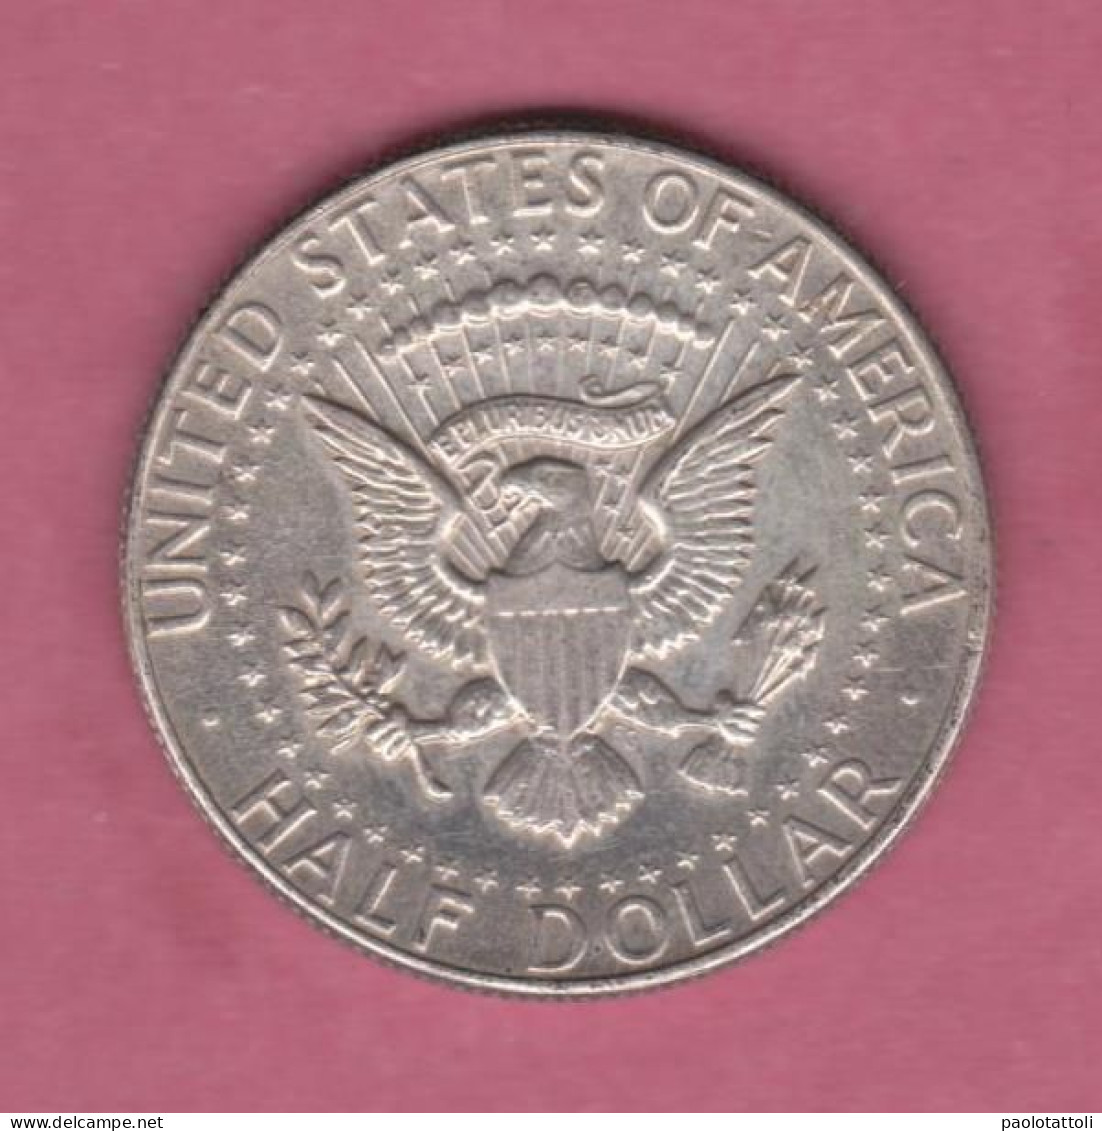 USA, 1964- Half Dollar- 90% Silver- Obverse Portrait Of John F. Kennedy. - Conmemorativas